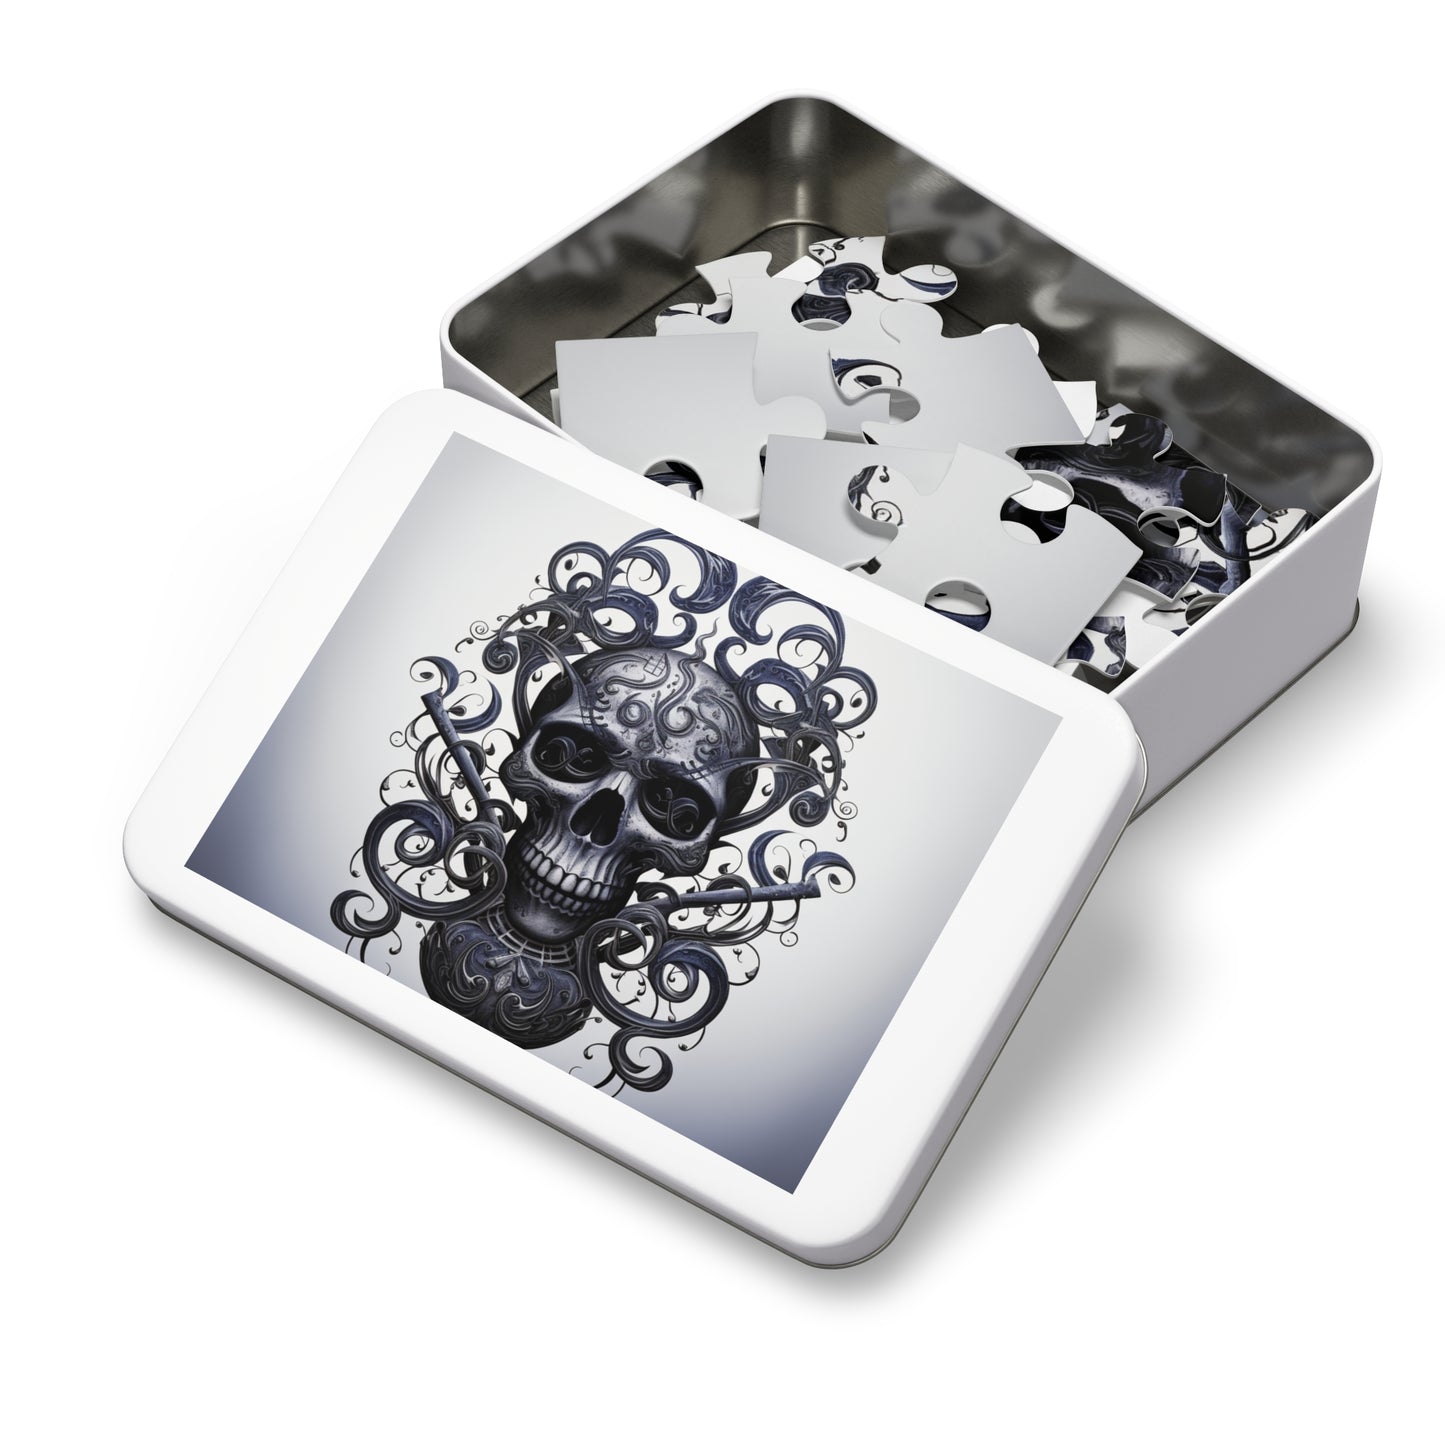 Jigsaw Puzzle (30, 110, 252, 500,1000-Piece) Skull Treble Clef 1